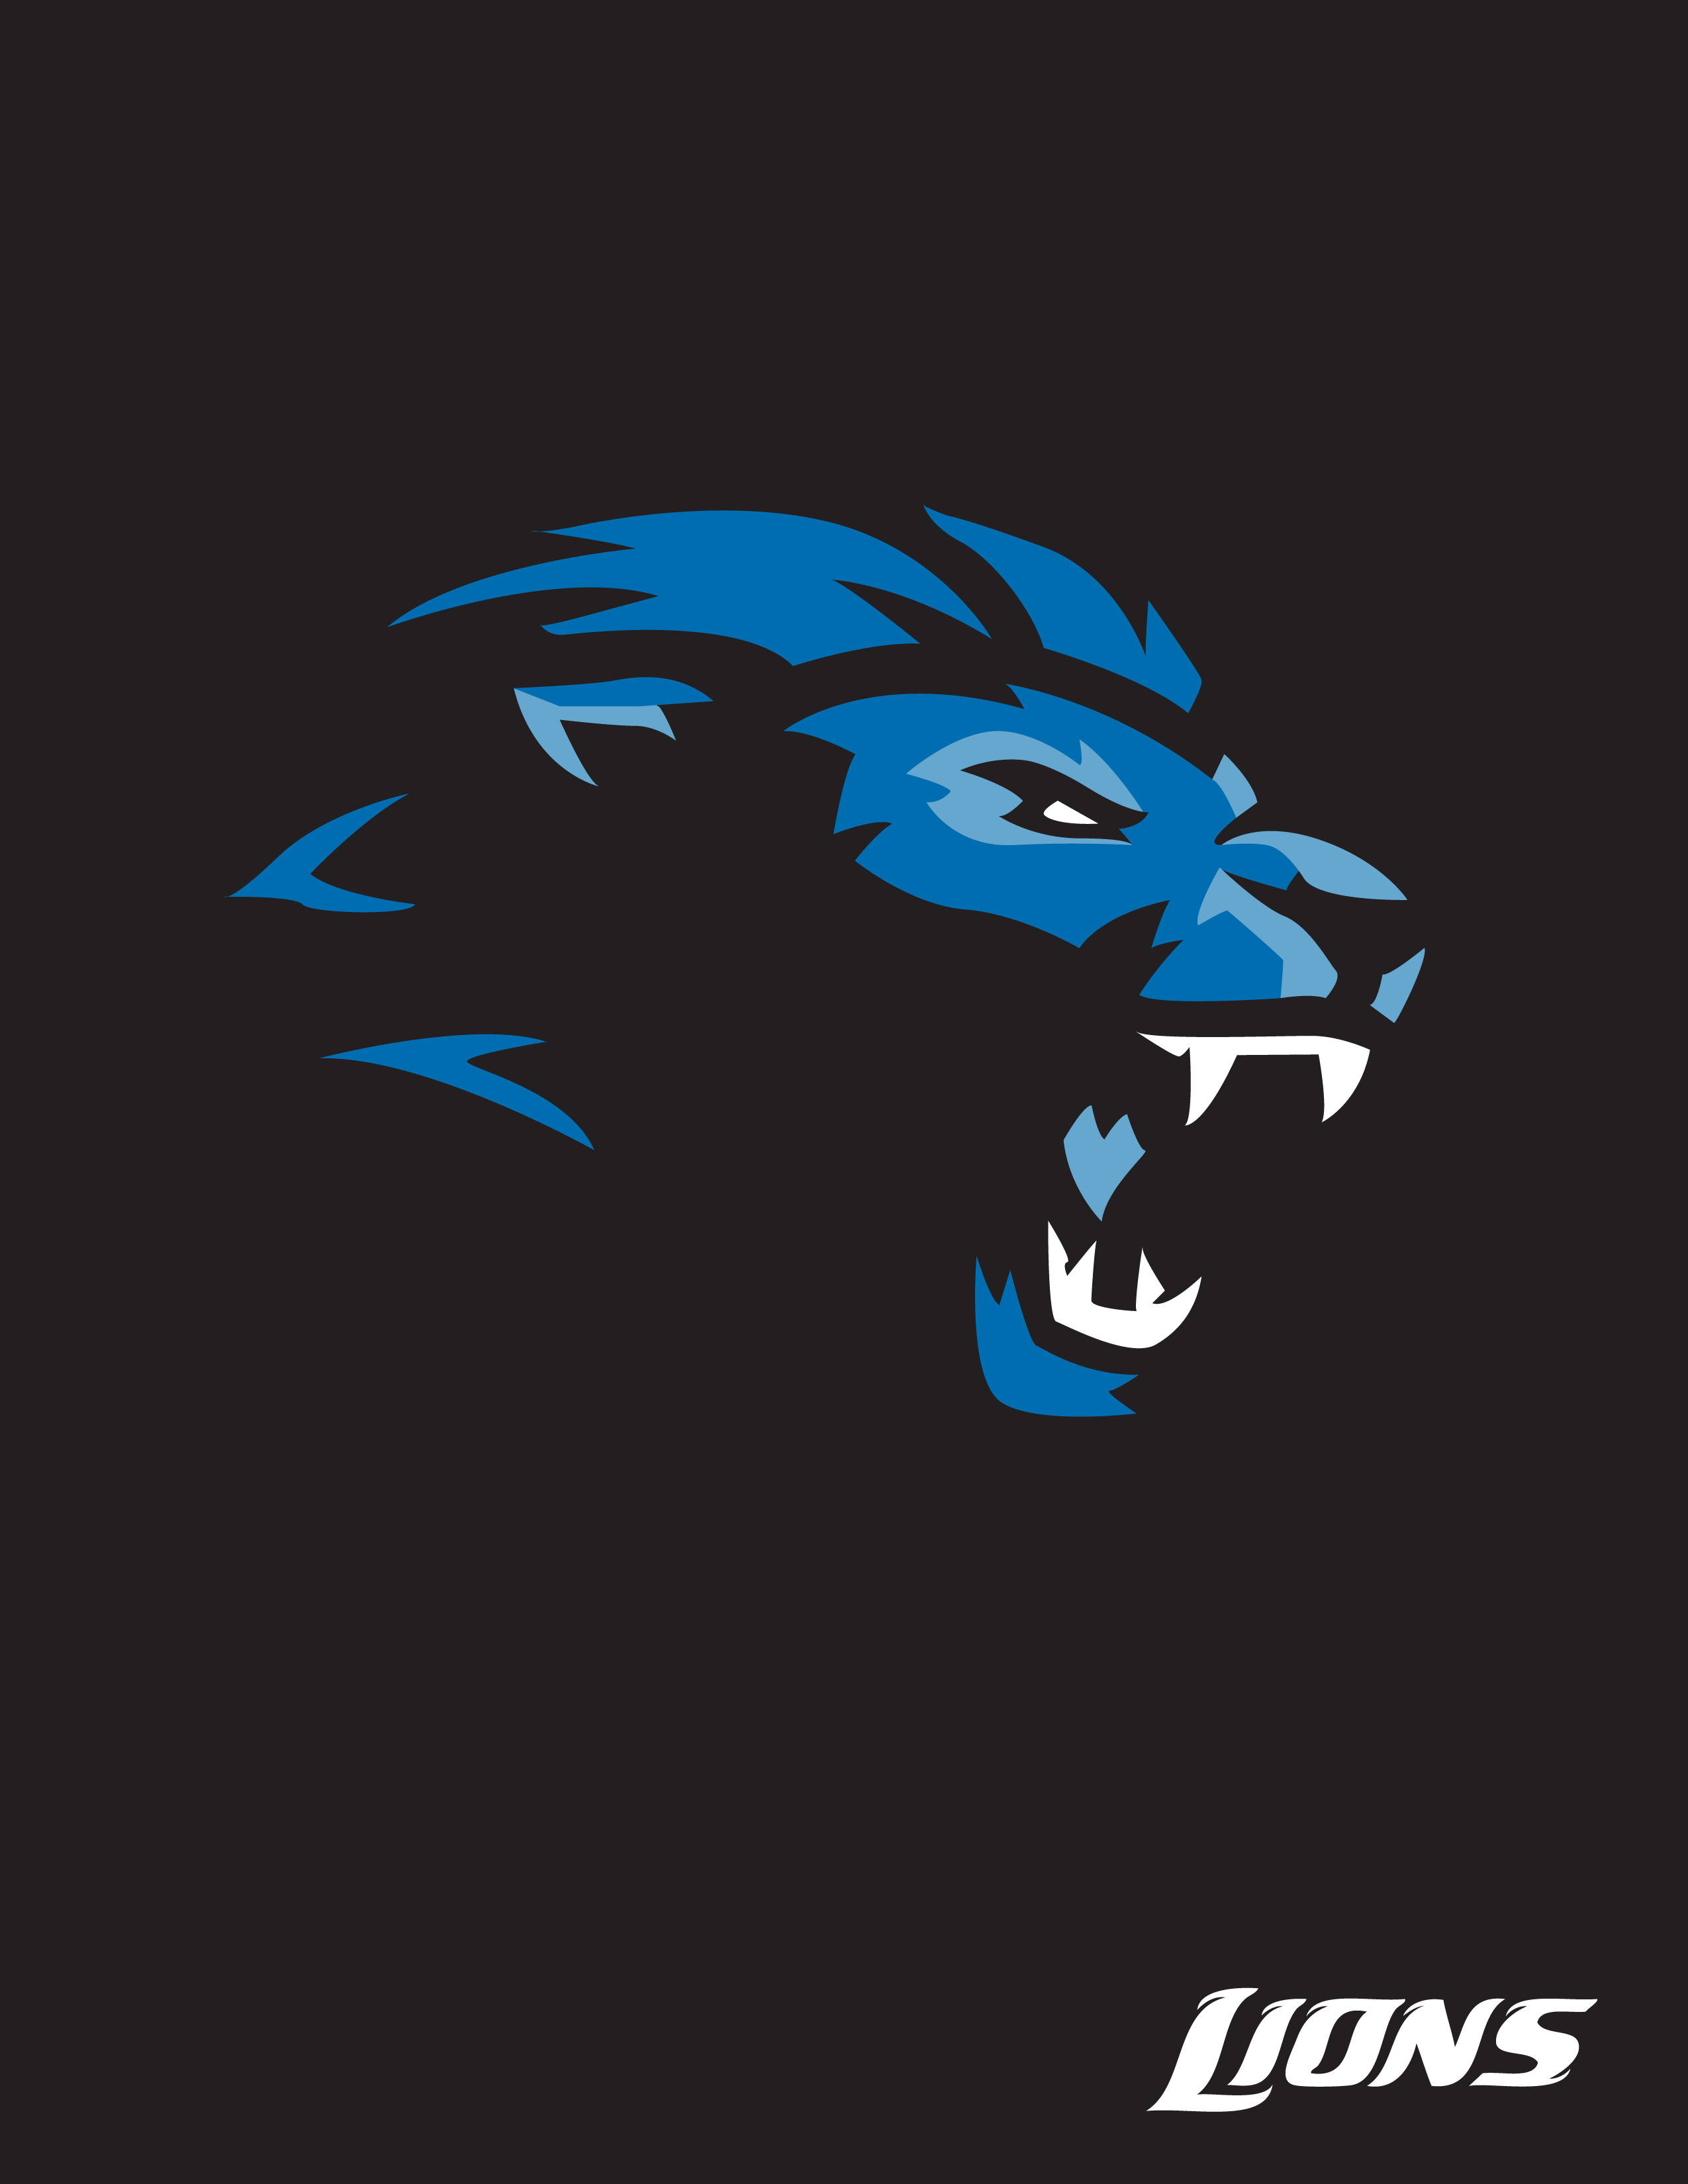 Lions Logo - Lions logo Design I did for fun : detroitlions